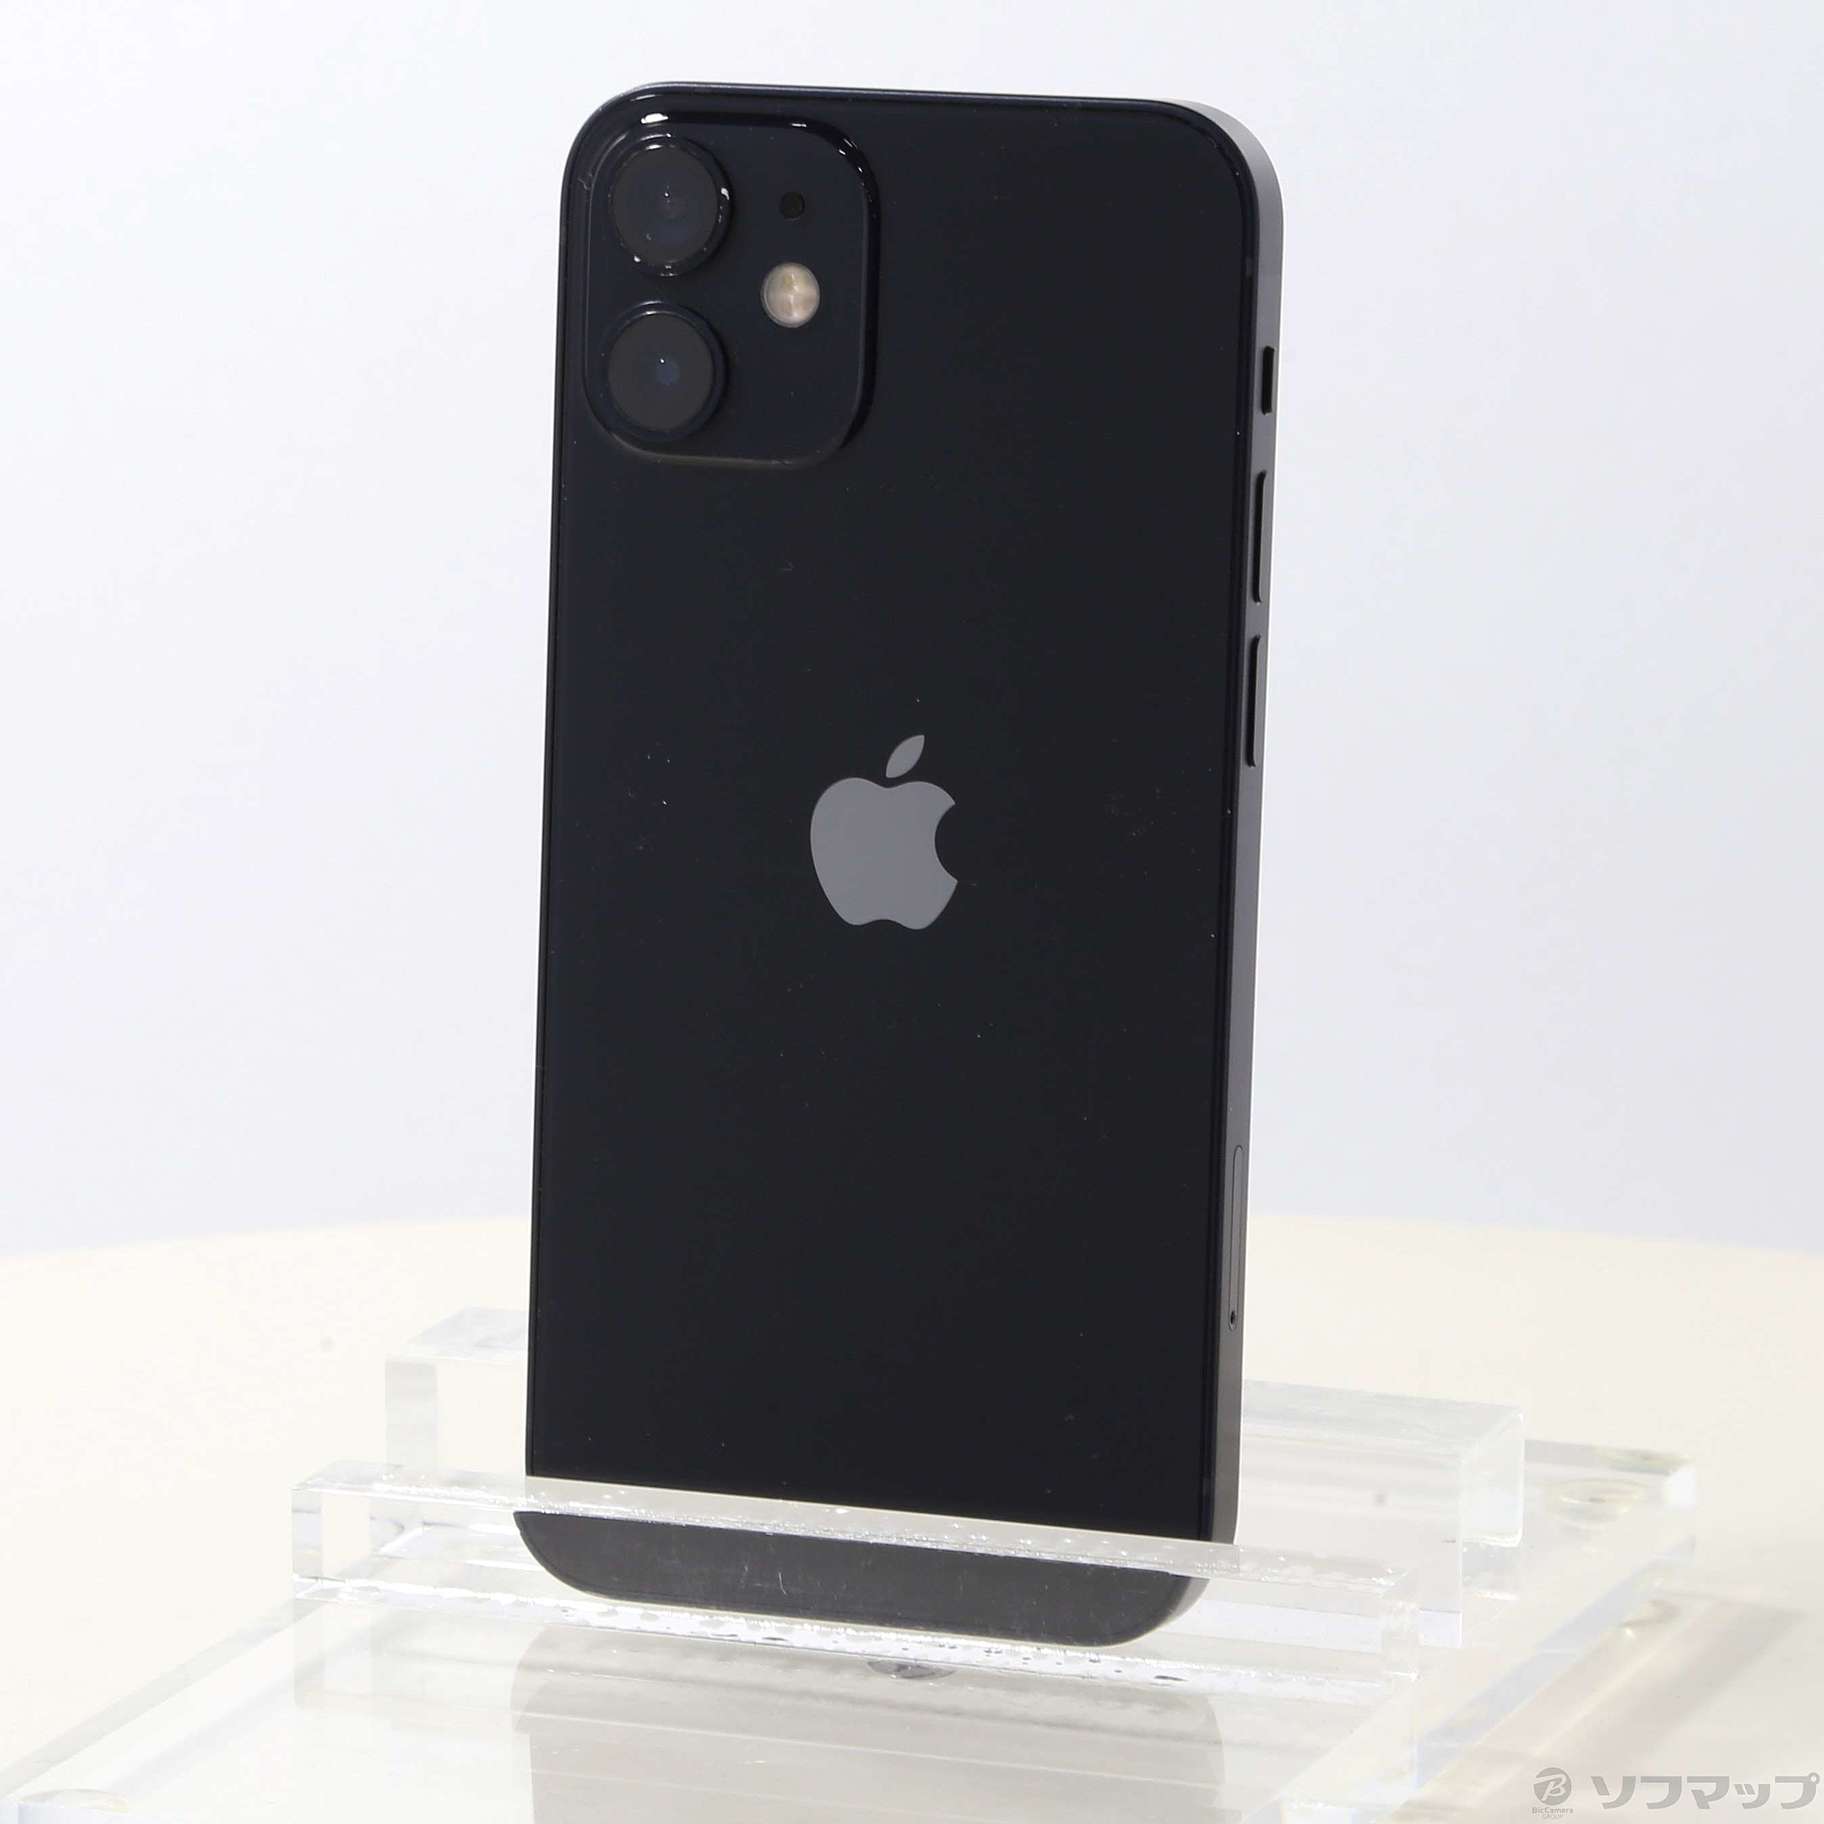 iPhone12 mini 64GB simフリー ブラック